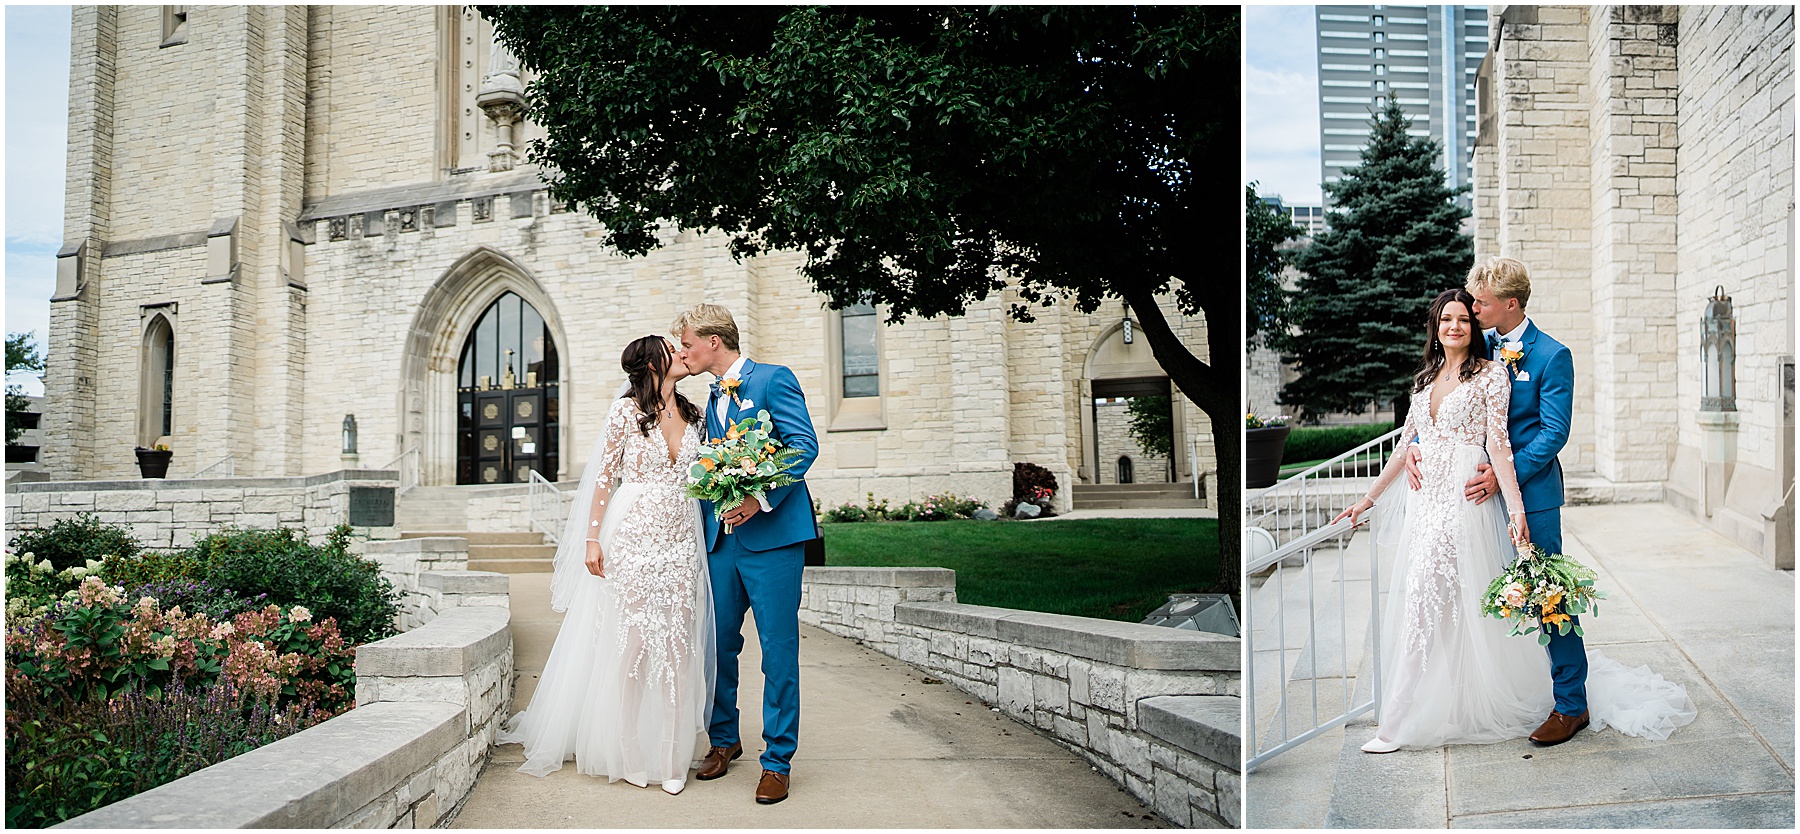 Fort Wayne wedding photographers capture wedding couple walking around venue recently married